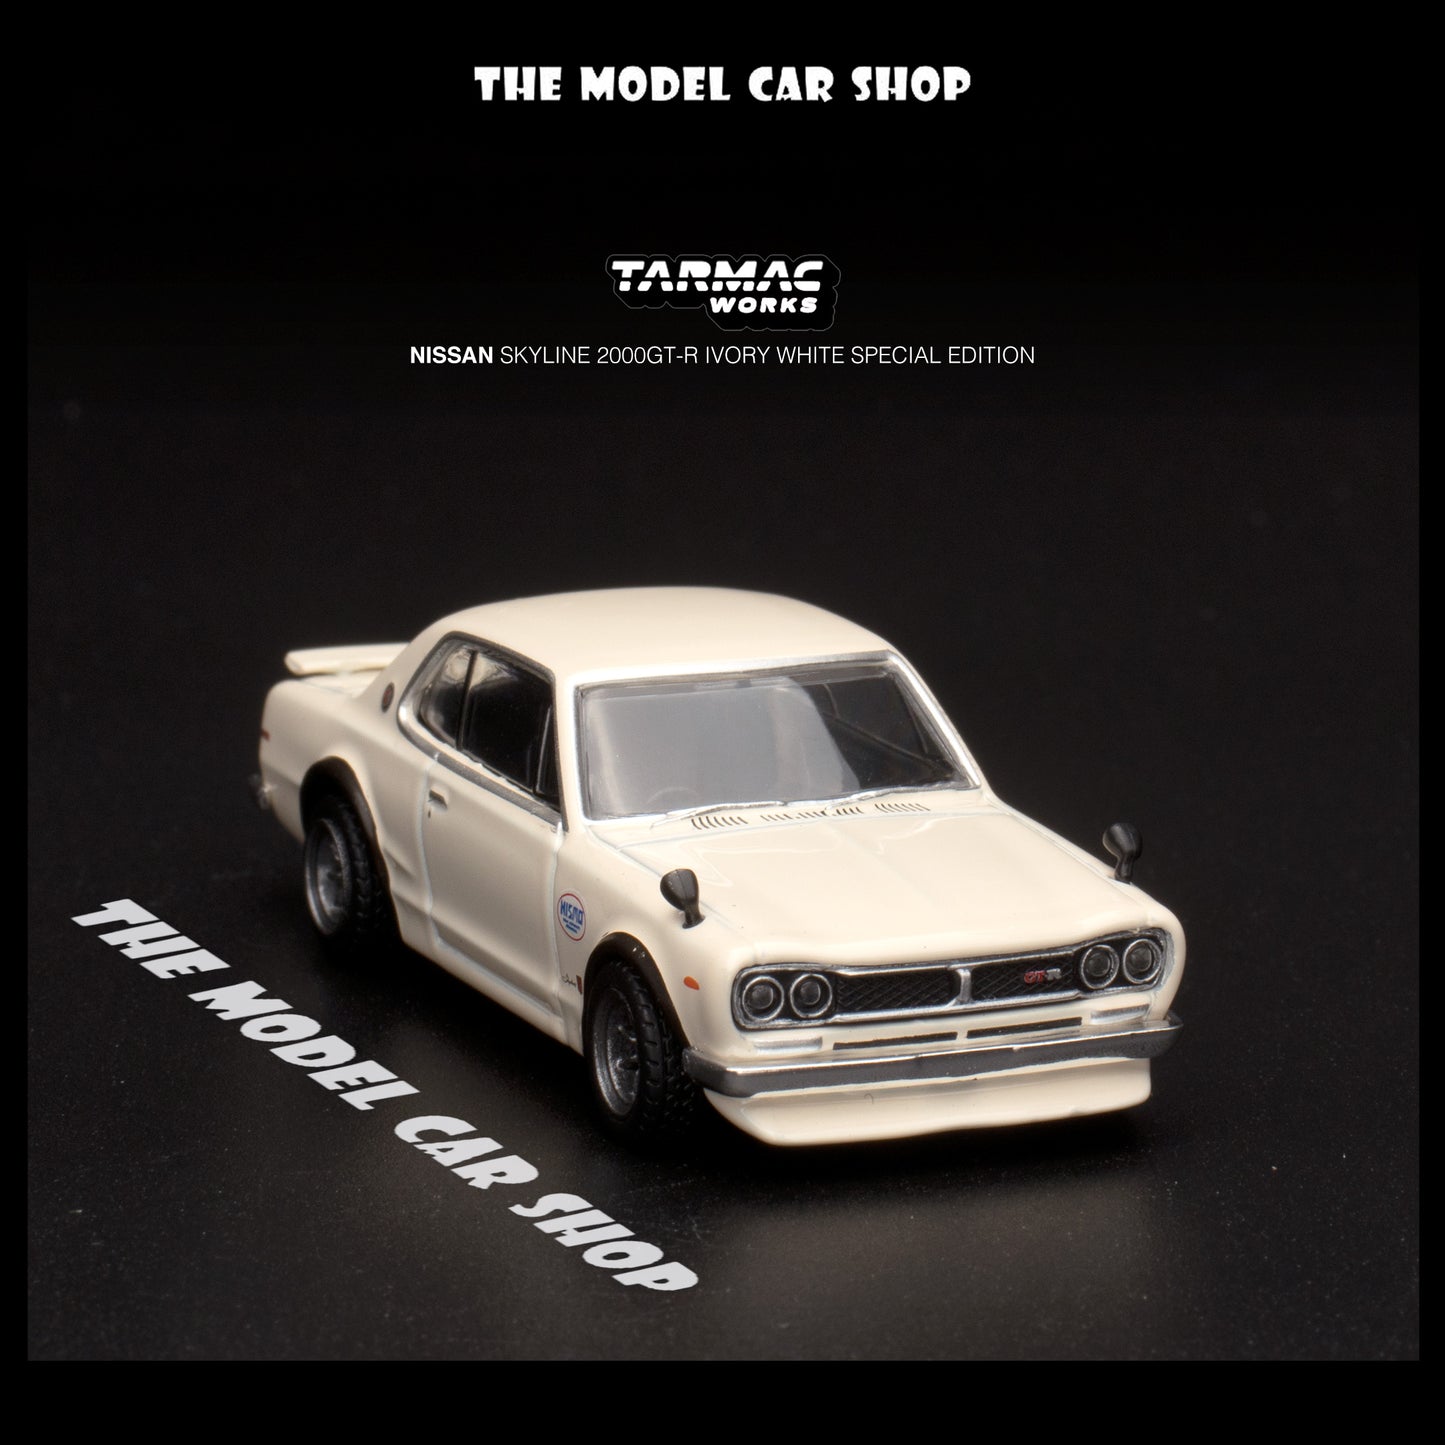 [Tarmac Works] Nissan Skyline 2000 GT-R (KPGC10) - Ivory White Special Edition